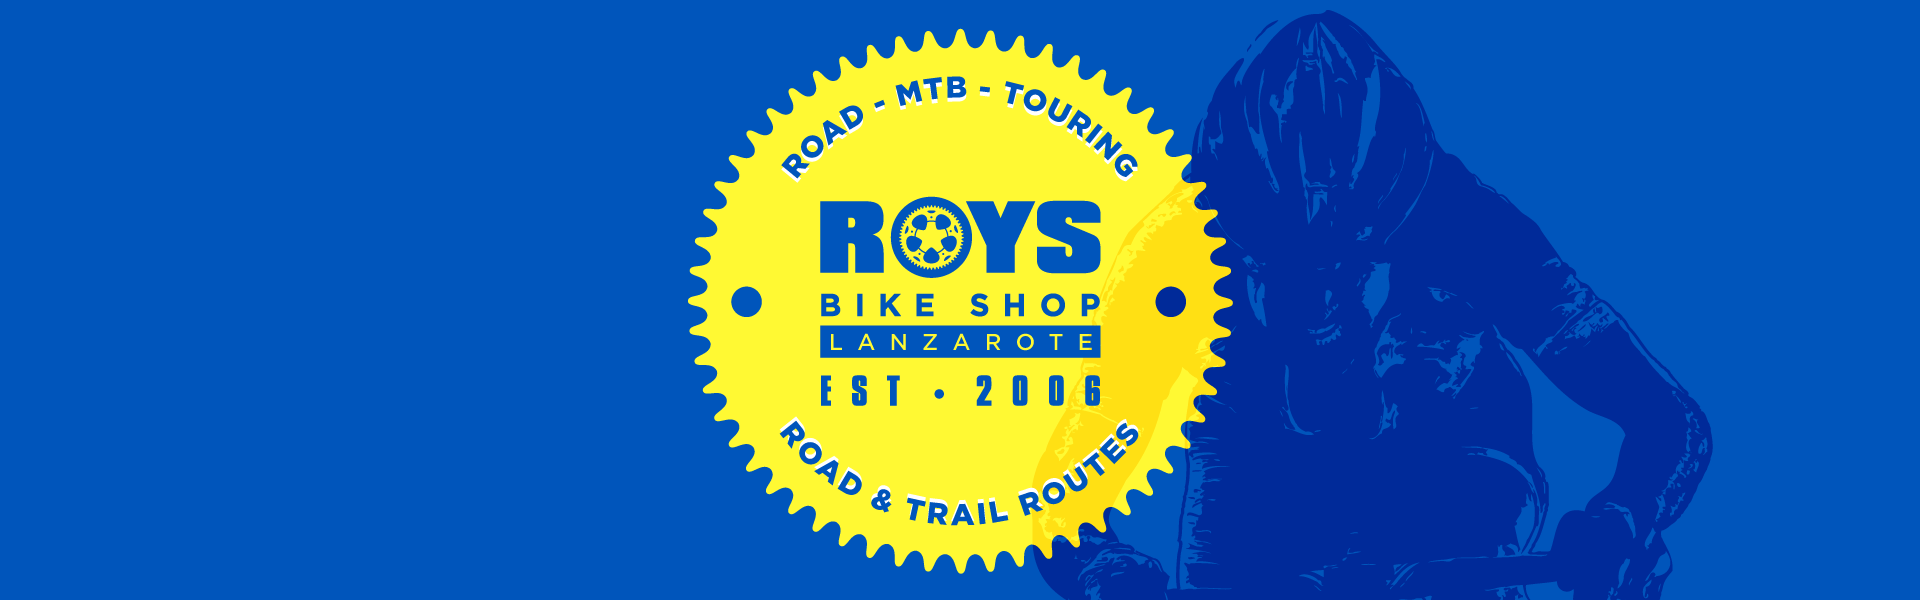 Roys-Bike-Shop-Lanzarote-Playa-Blanca